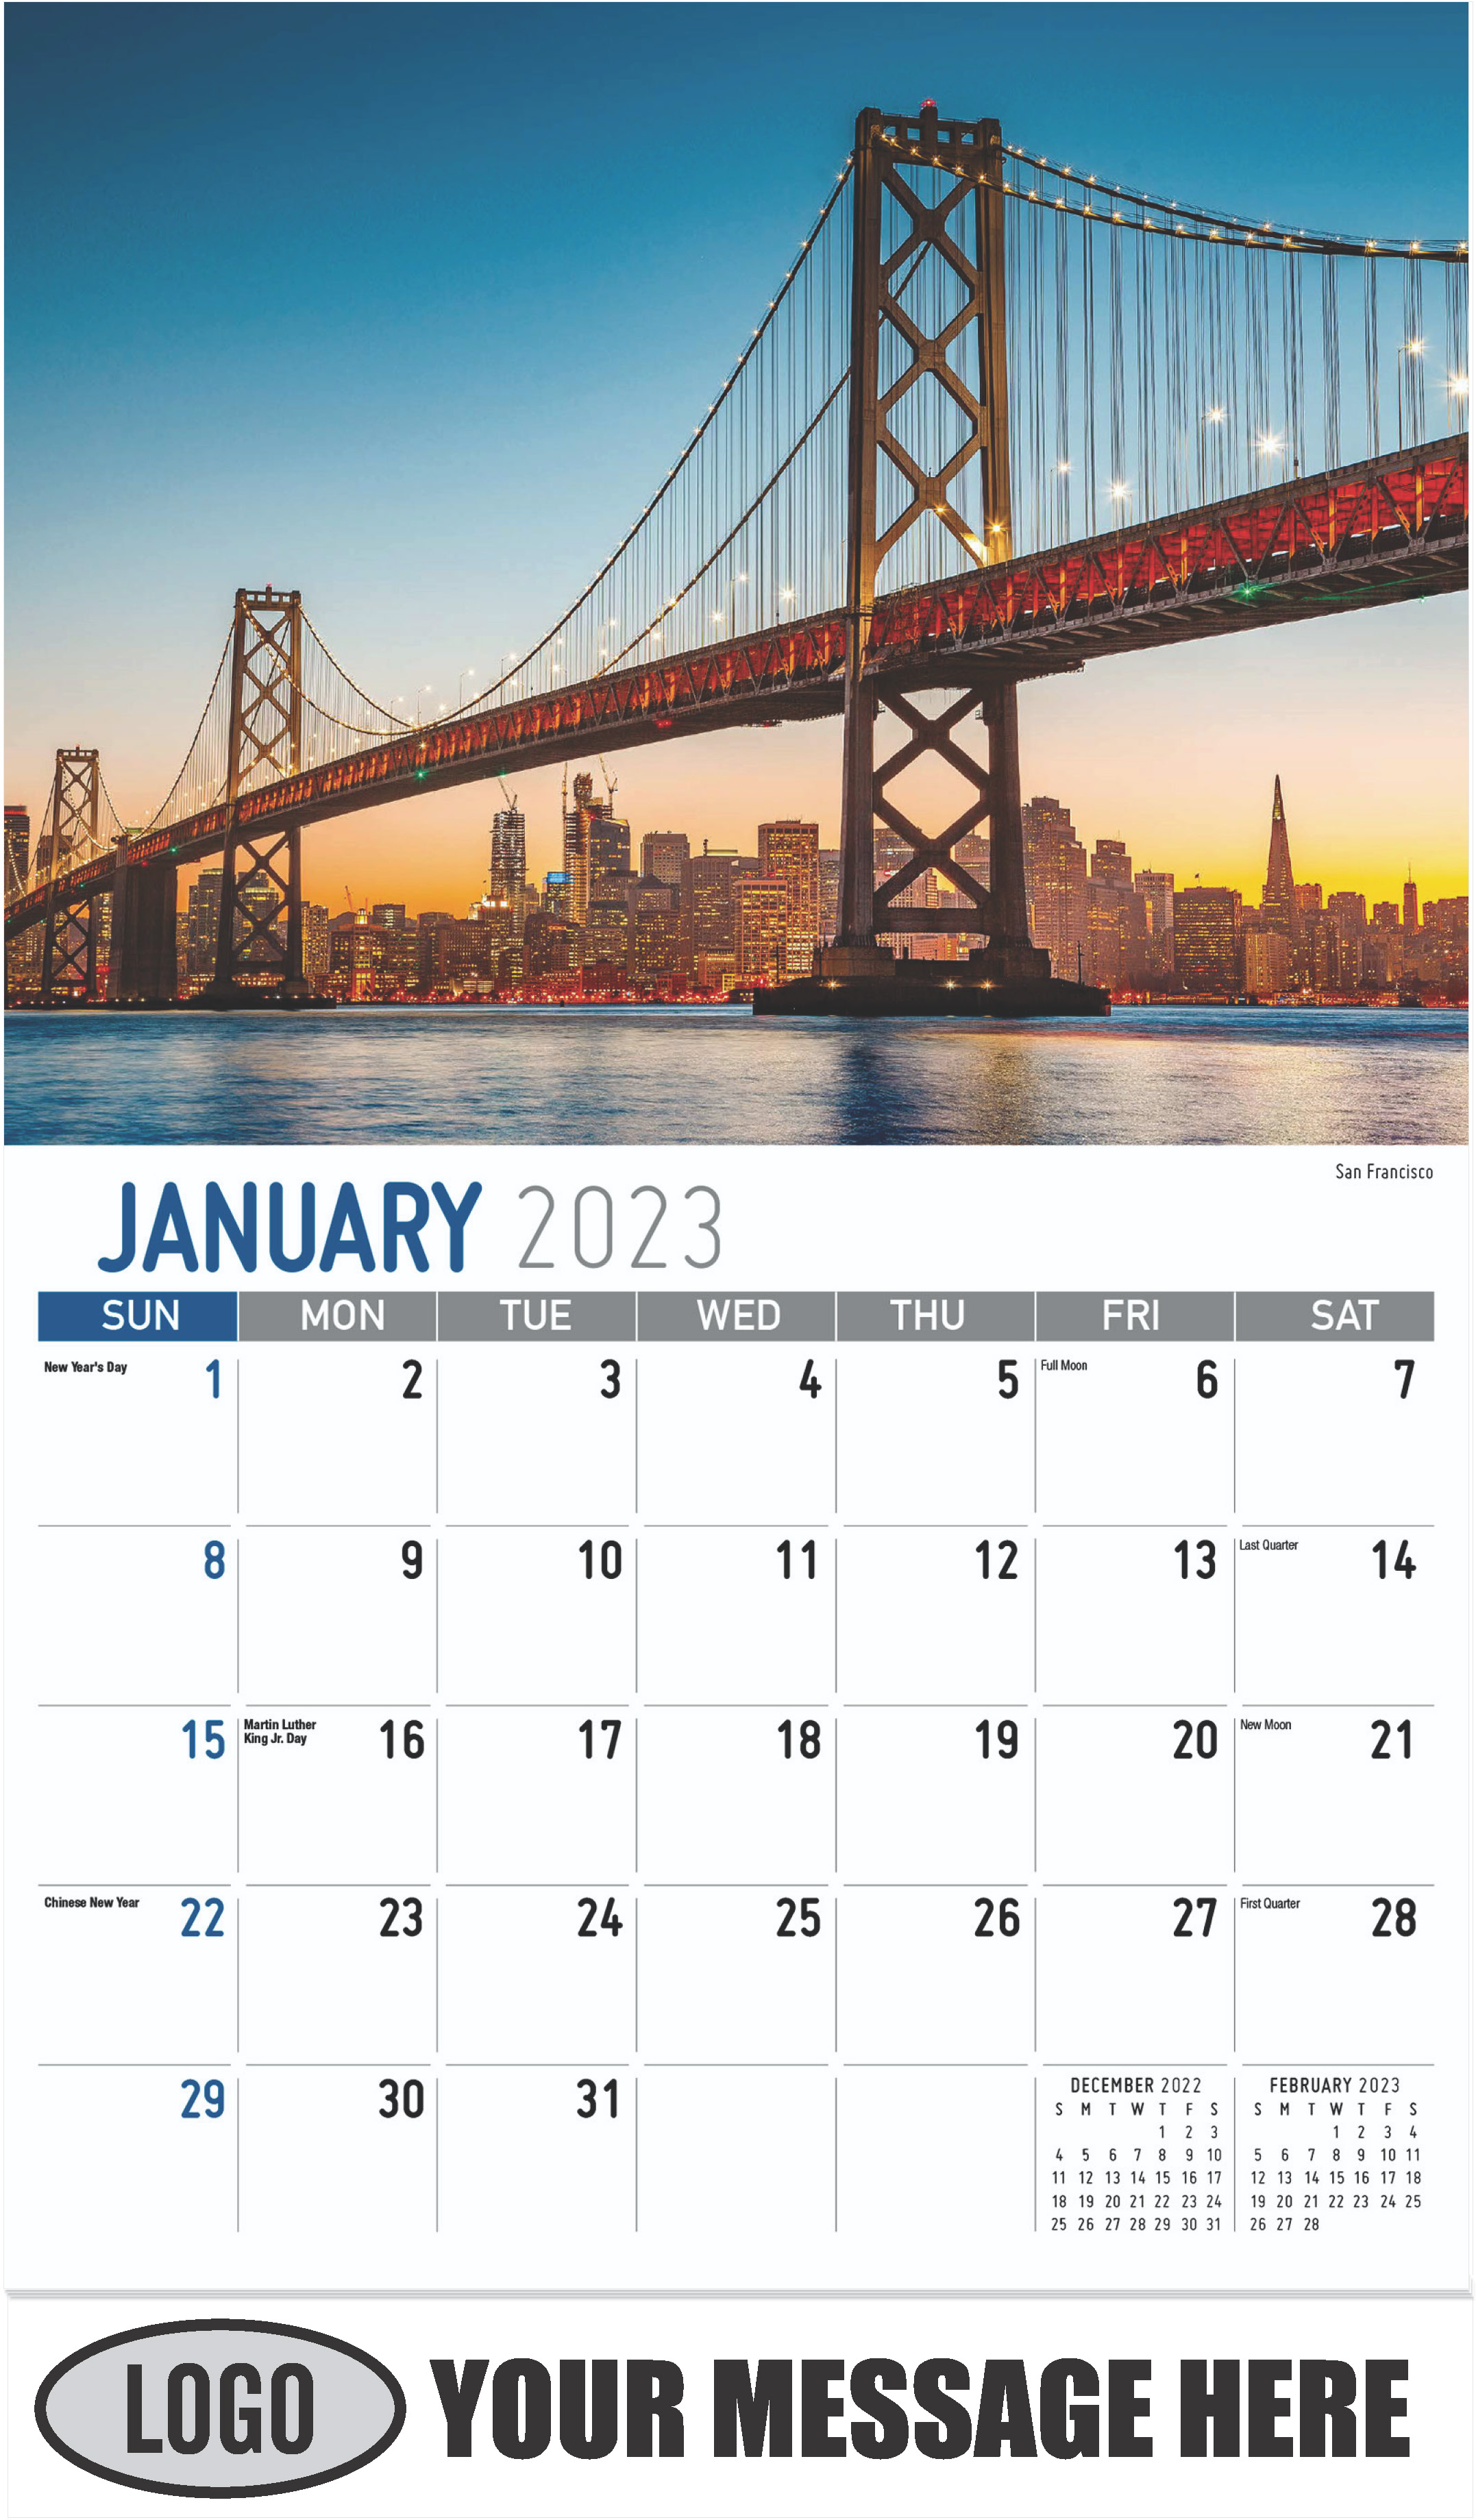 San Francisco - January - Scenes of California 2023 Promotional Calendar